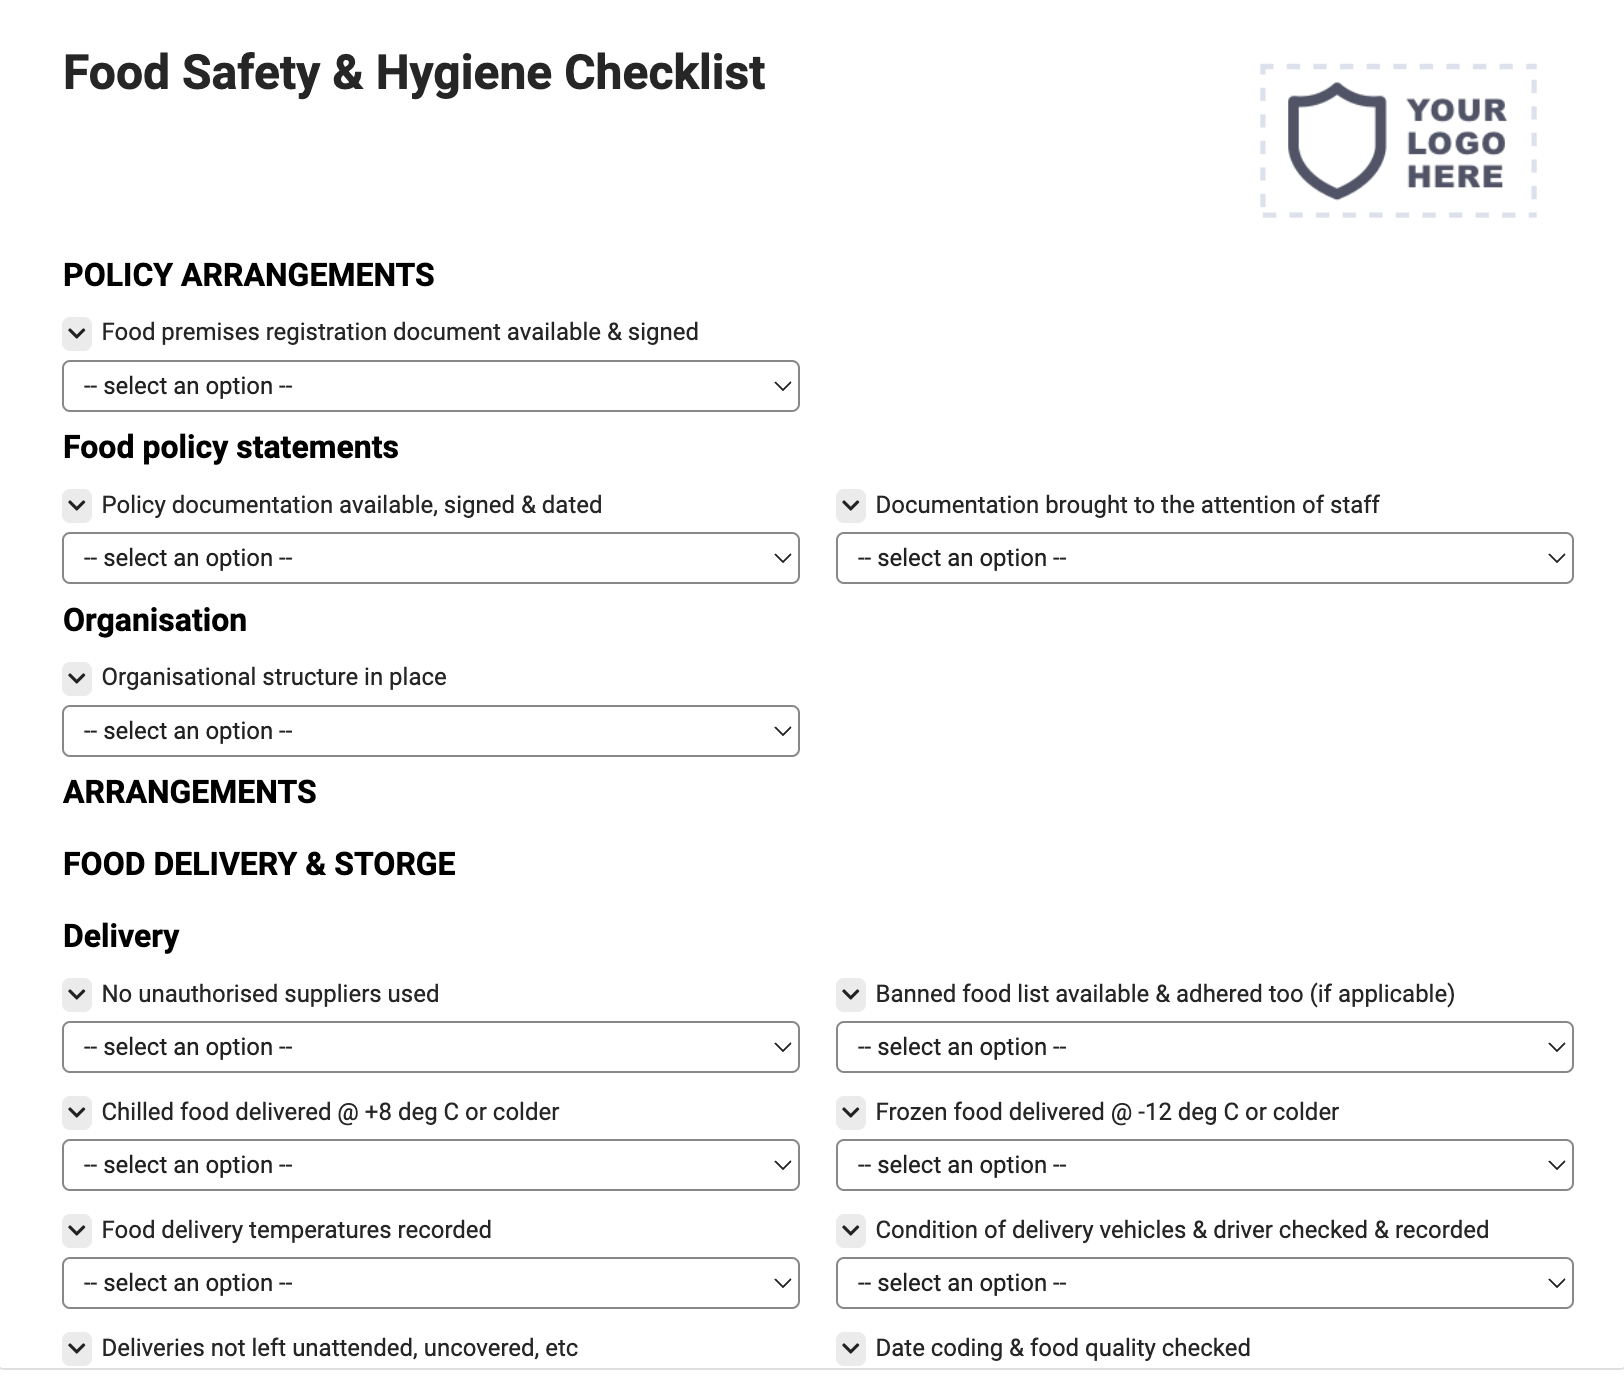 Food Safety & Hygiene Checklist